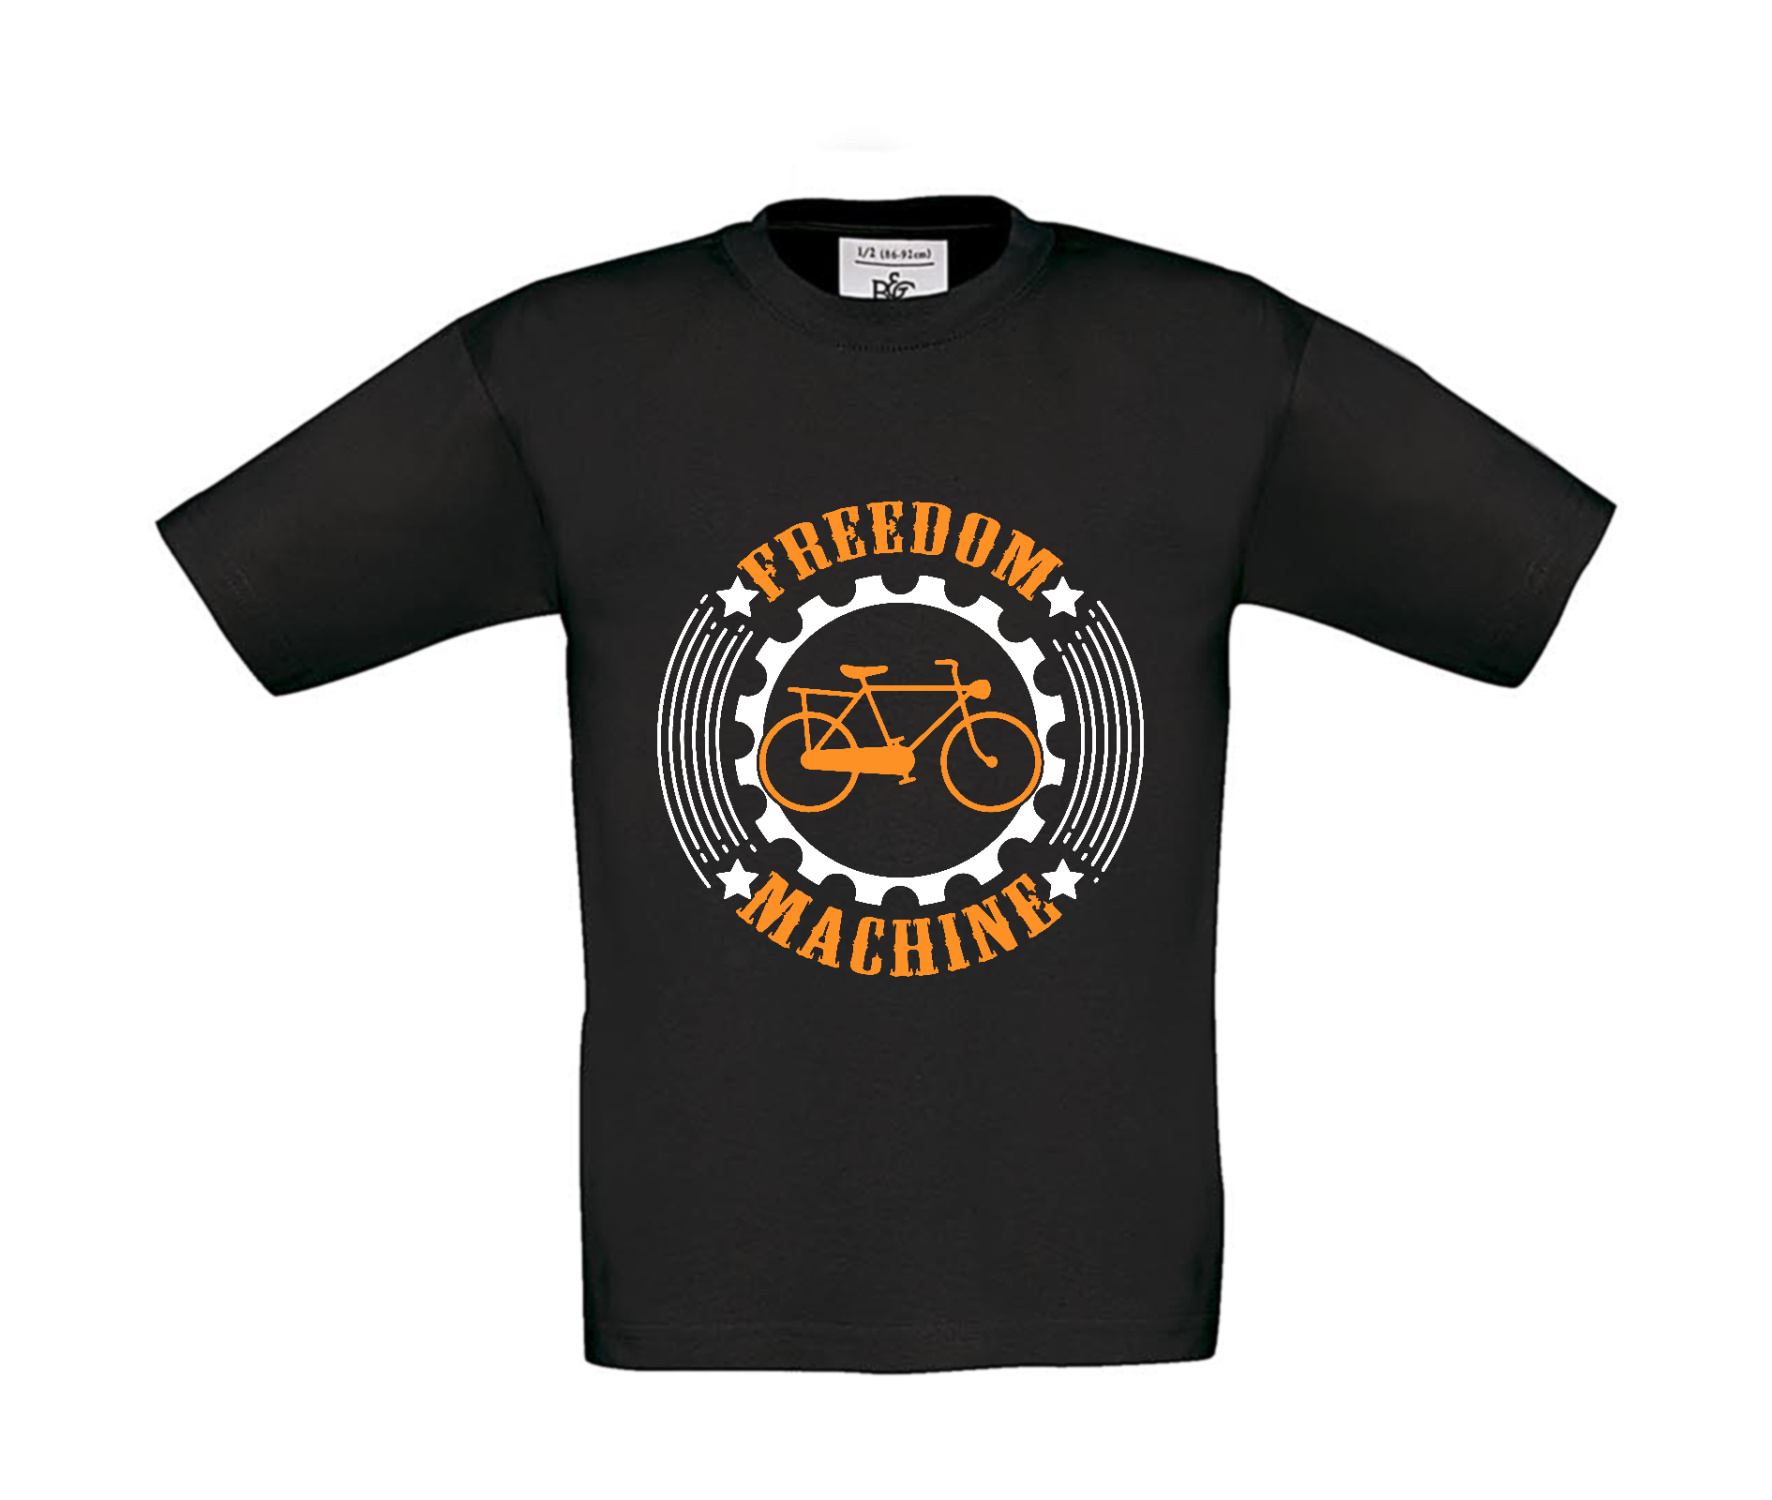 T-Shirt Kinder Fahrrad Freedom Machine